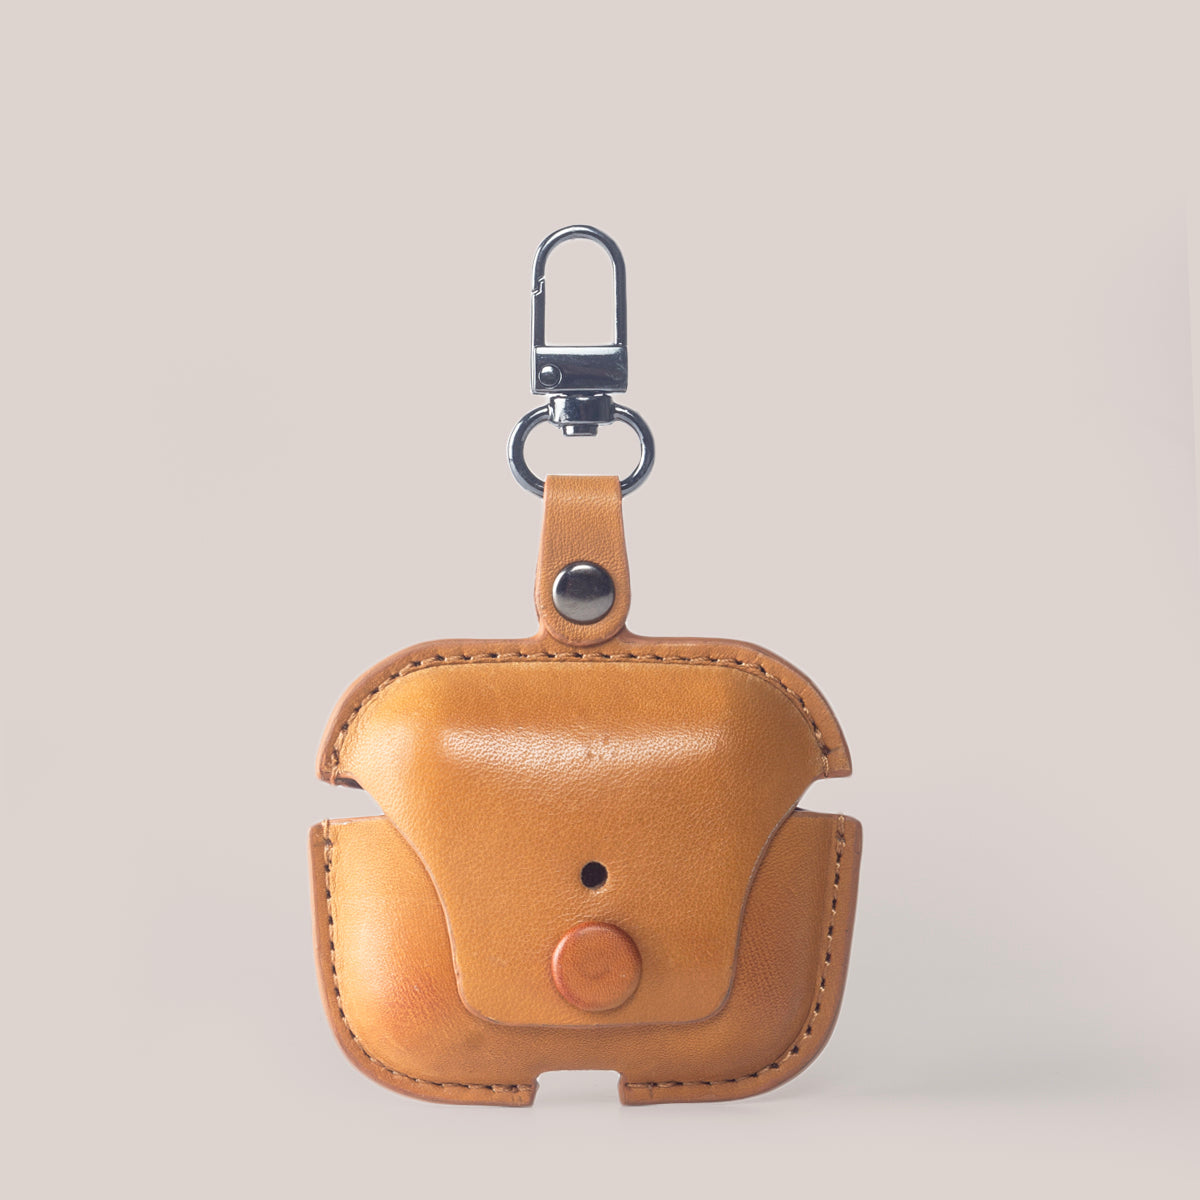 Shop Leather Protective Air-pod Pro Case Cover Online